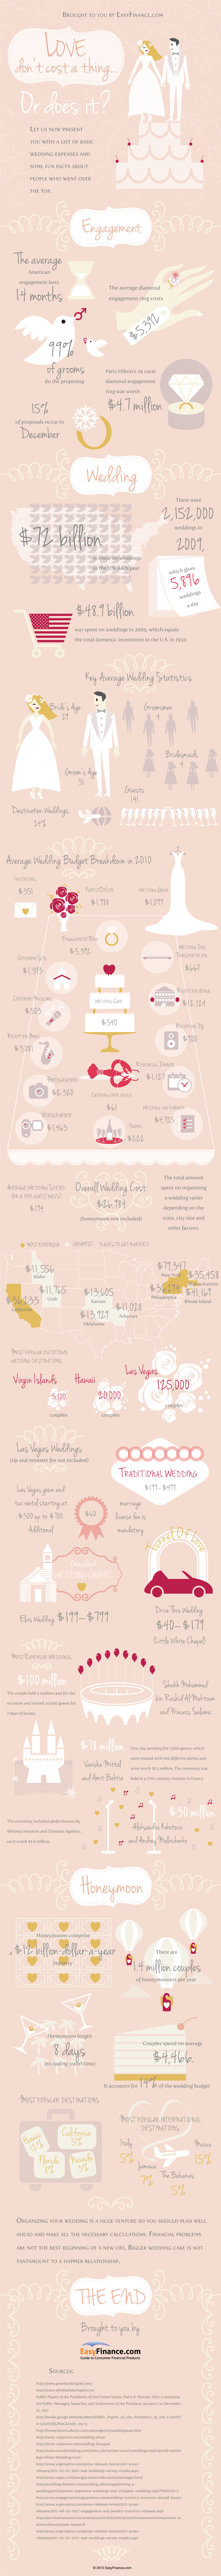 Wedding Budget Infographic